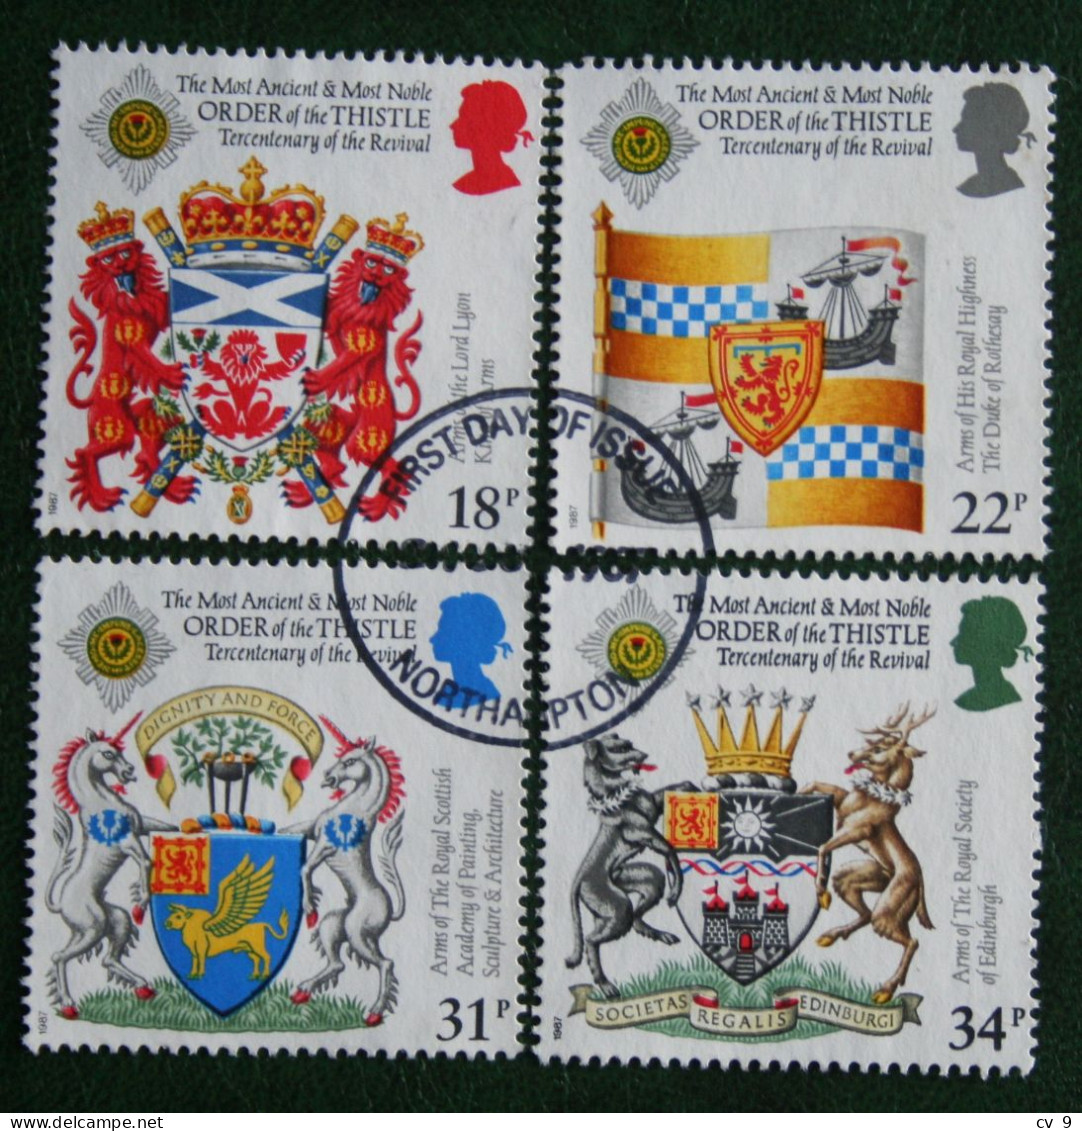 ORDER OF THE THISTLE ANNIVERSARY (Mi 1113-1116) 1987 Used Gebruikt Oblitere ENGLAND GRANDE-BRETAGNE GB GREAT BRITAIN - Used Stamps